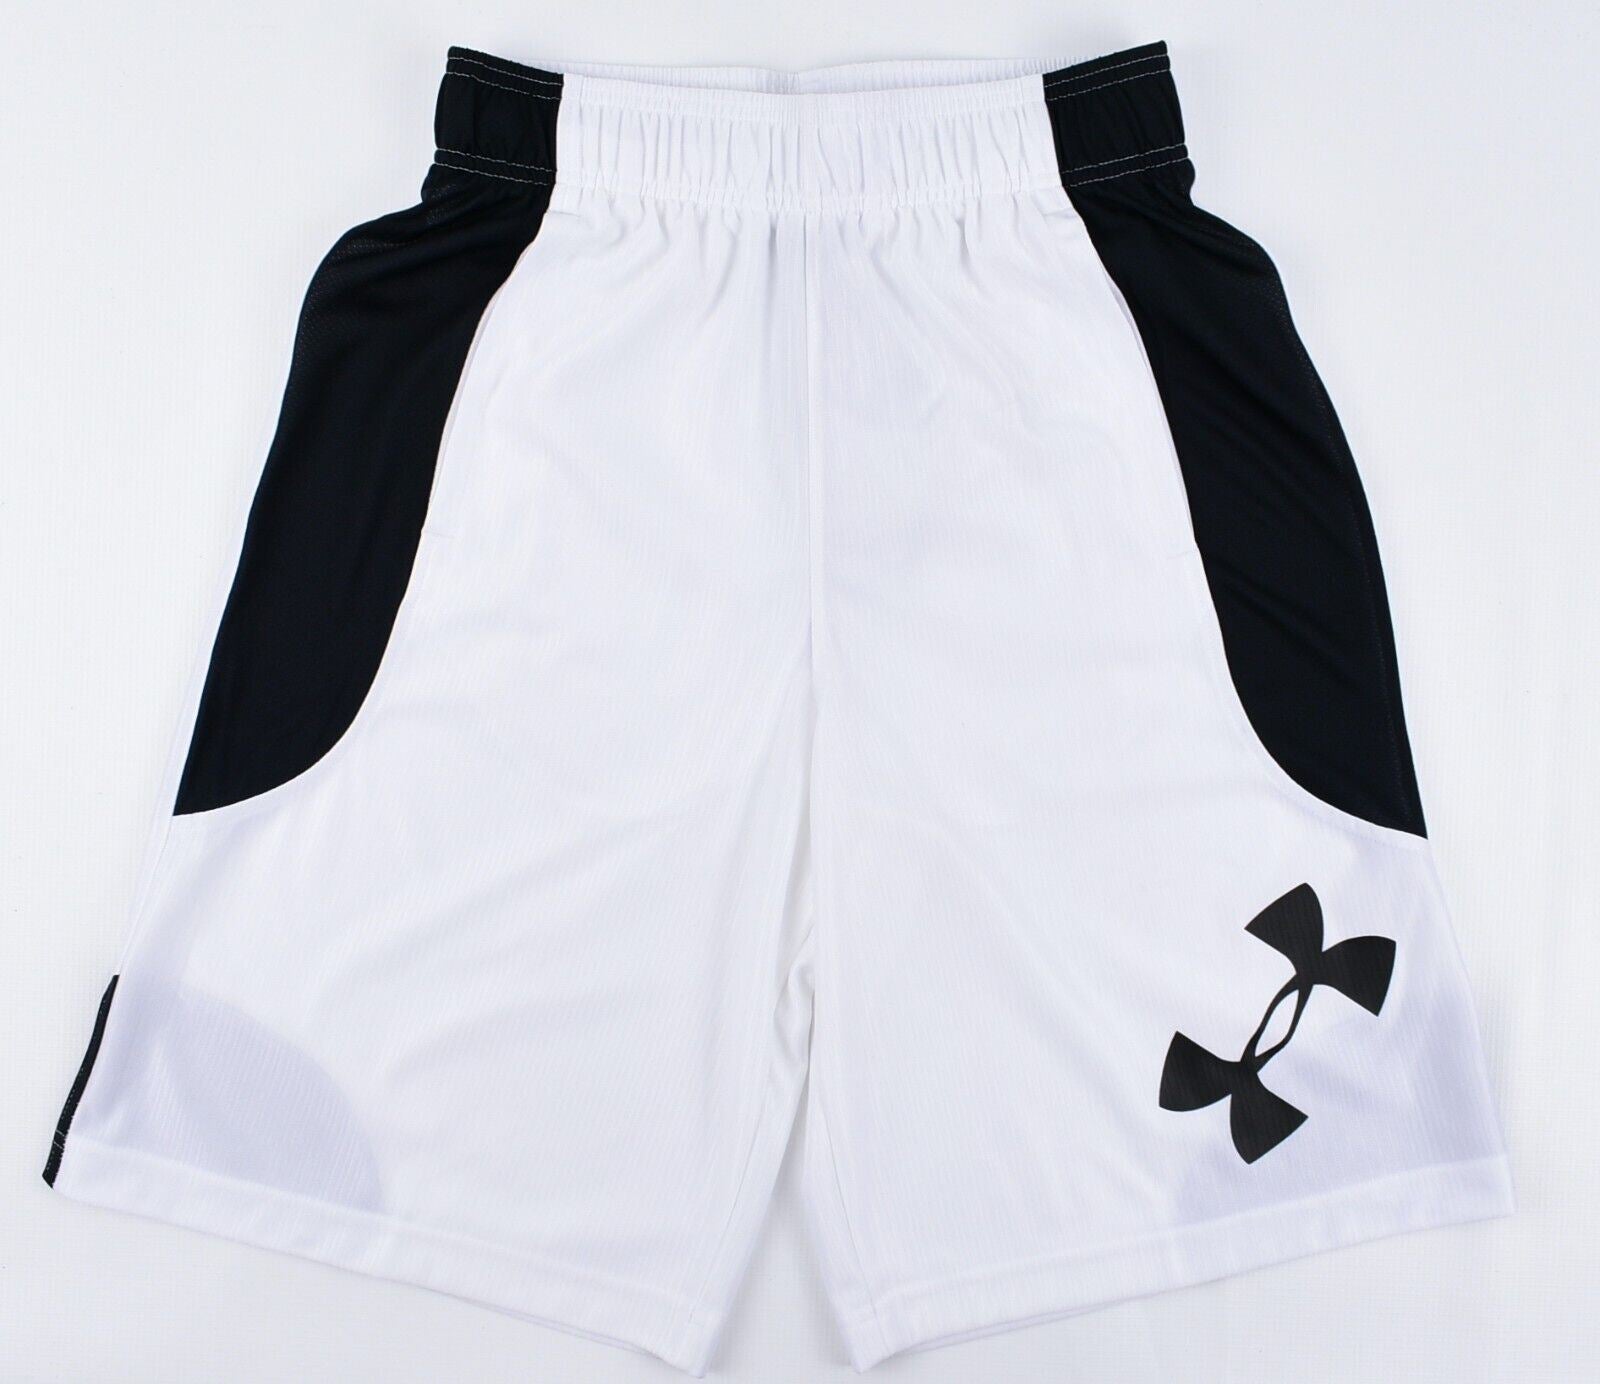 UNDER ARMOUR Men's HeatGear Perimeter Loose Fit Shorts, White/Black, size SMALL